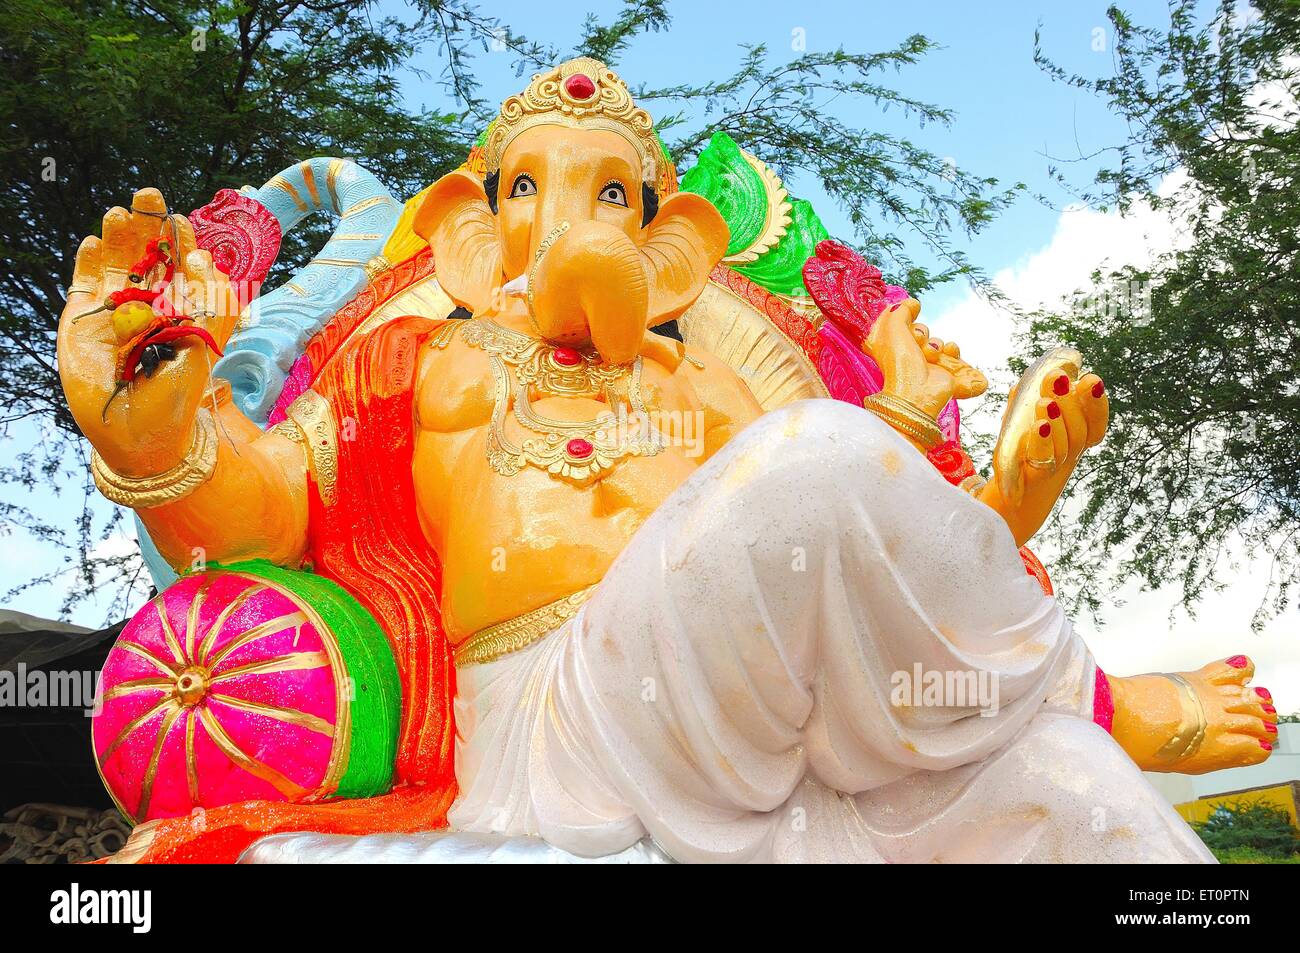 Lord ganesha idol ; Marwar ; Rajasthan ; India Stock Photo